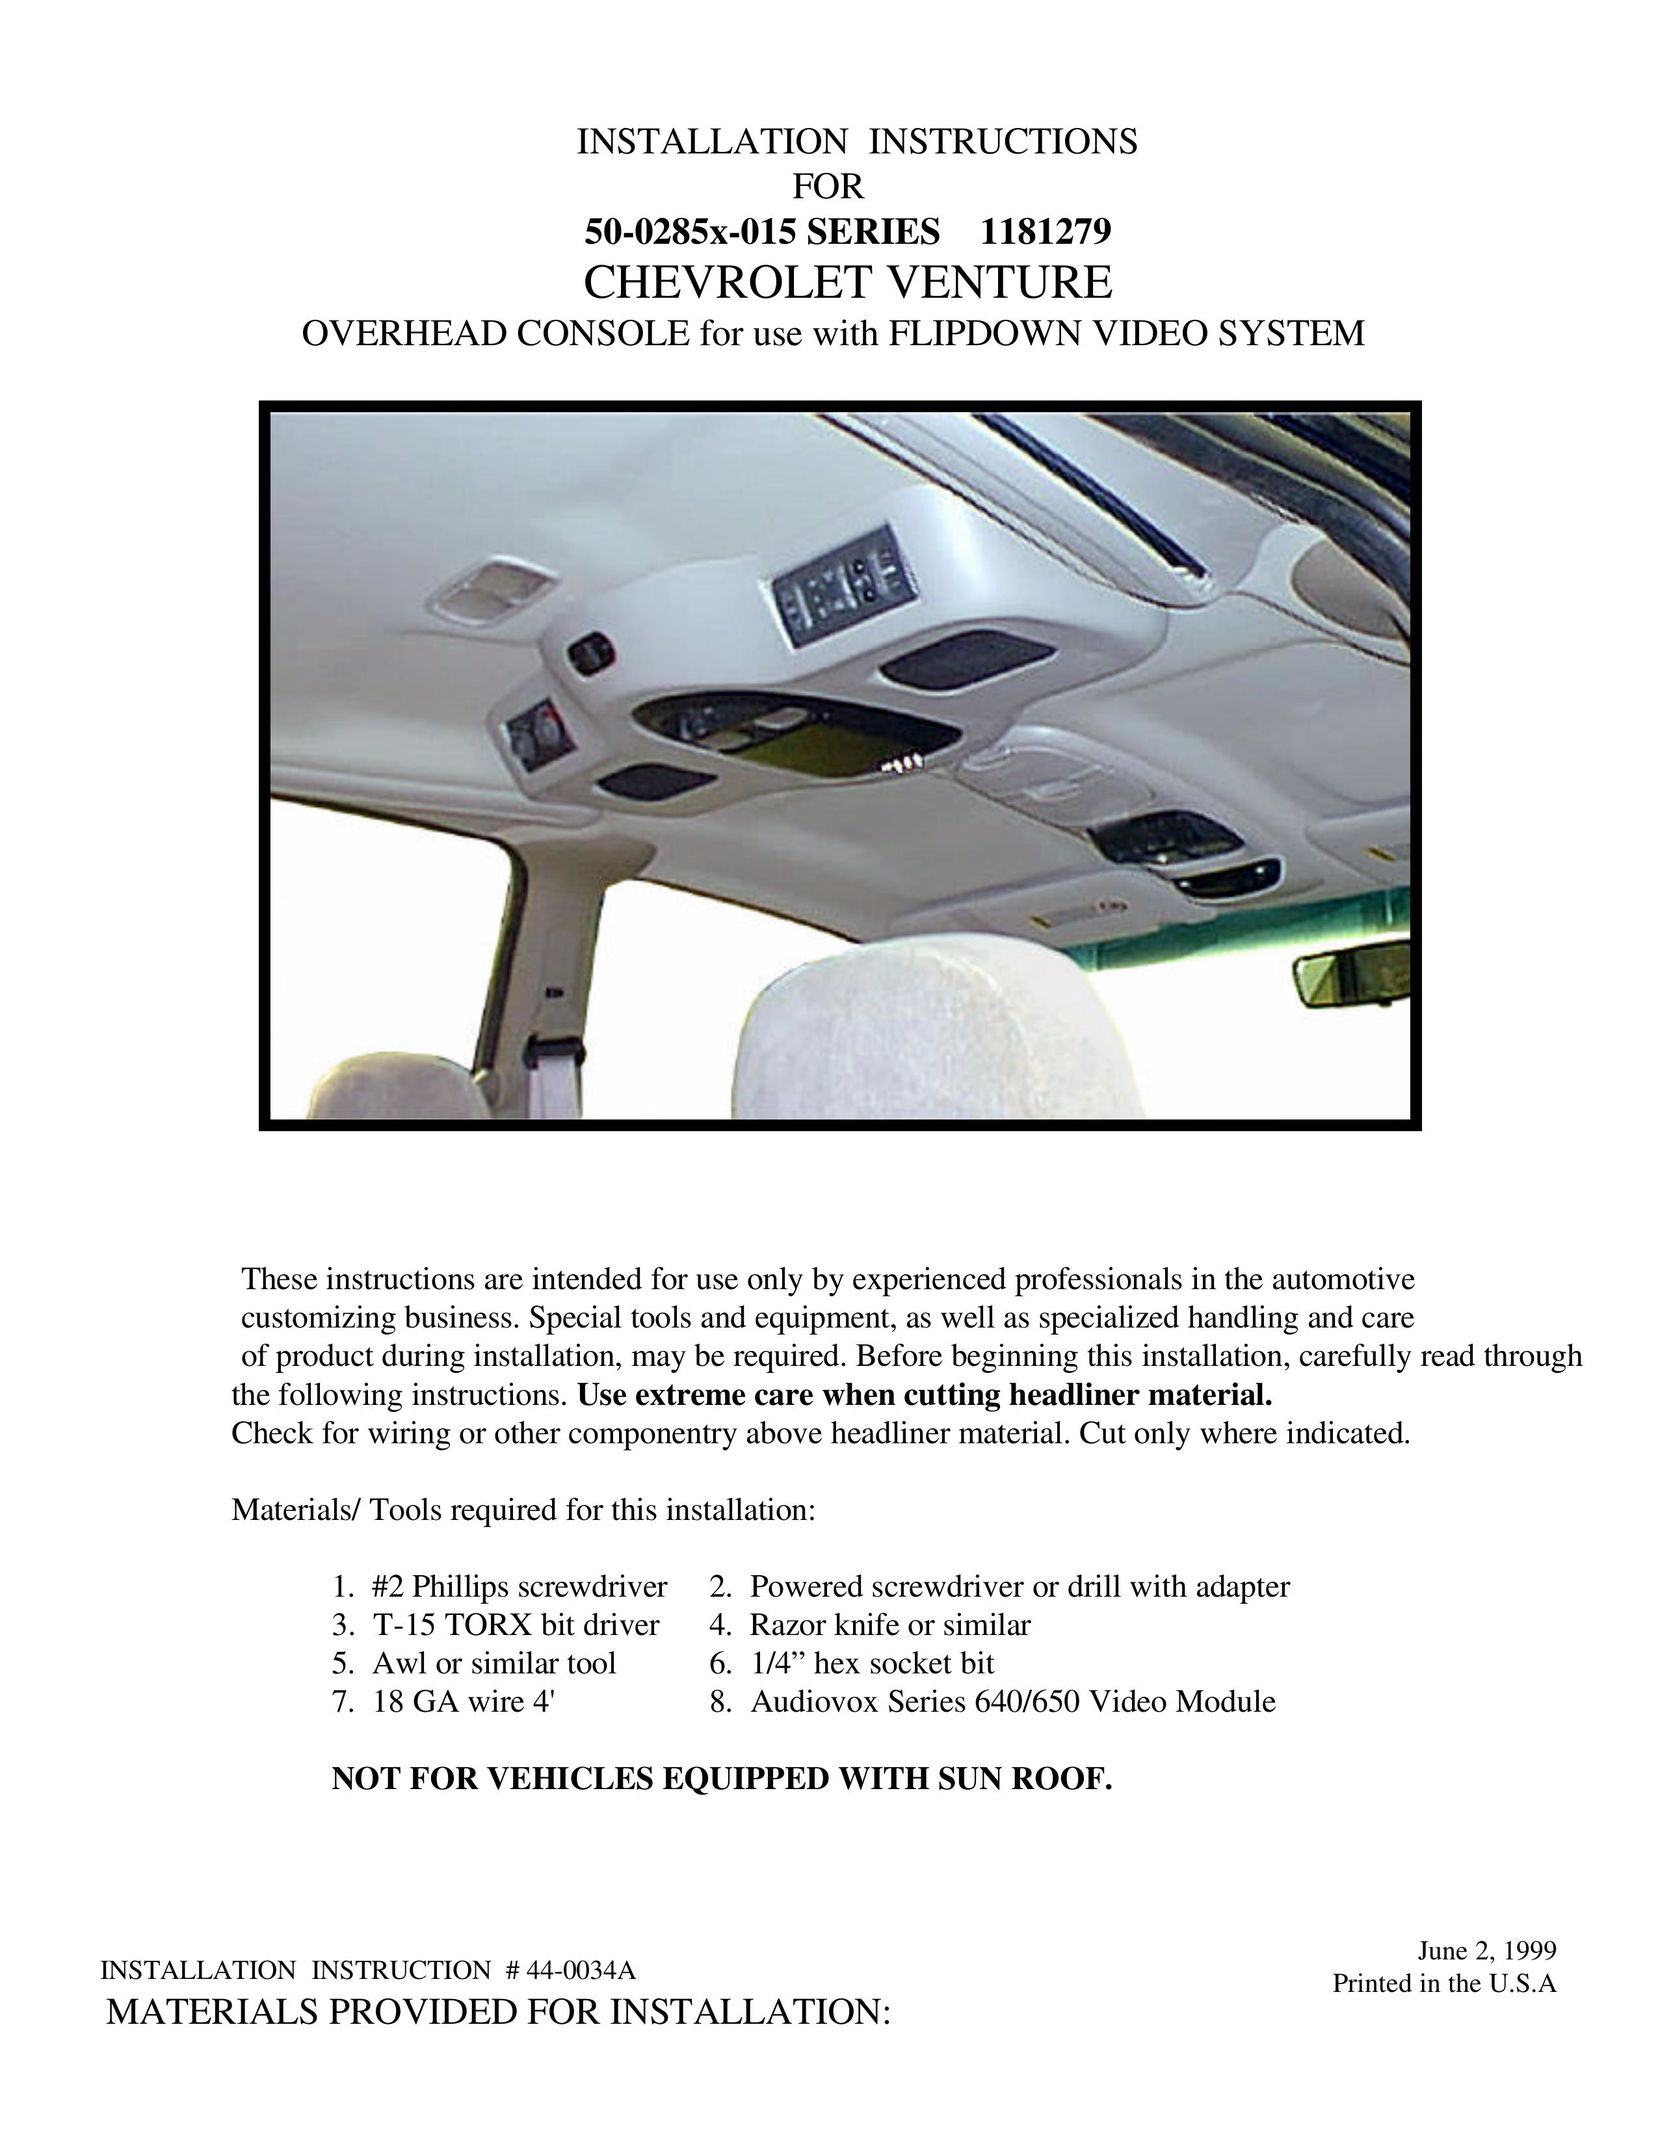 Audiovox 1181279 Car Video System User Manual